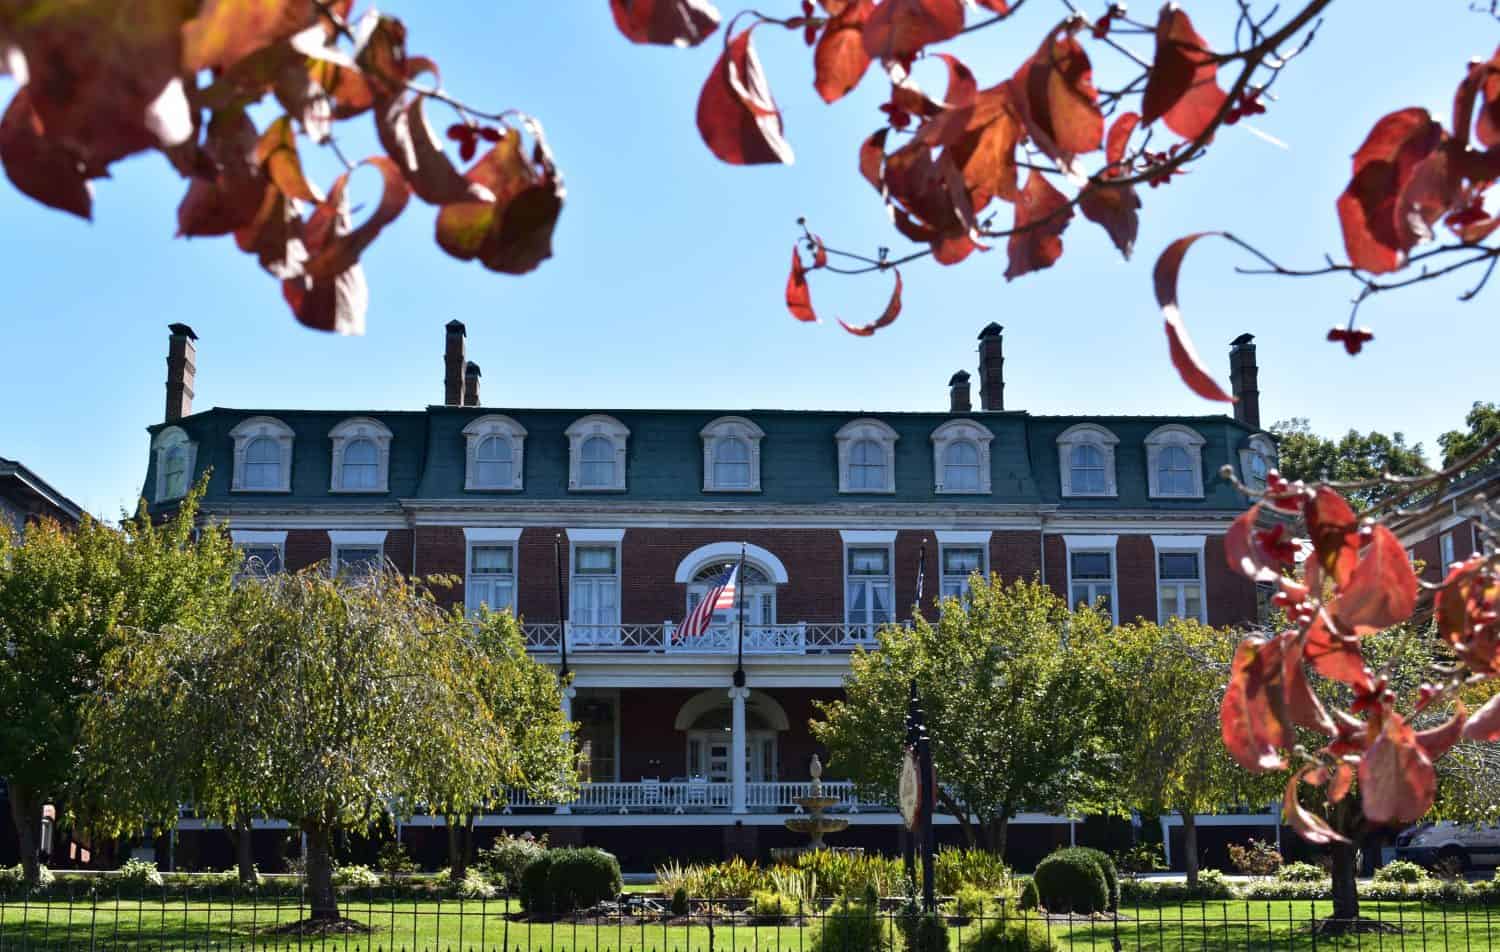 Fall colors at the historic Martha Washington Inn in Abingdon, Virginia